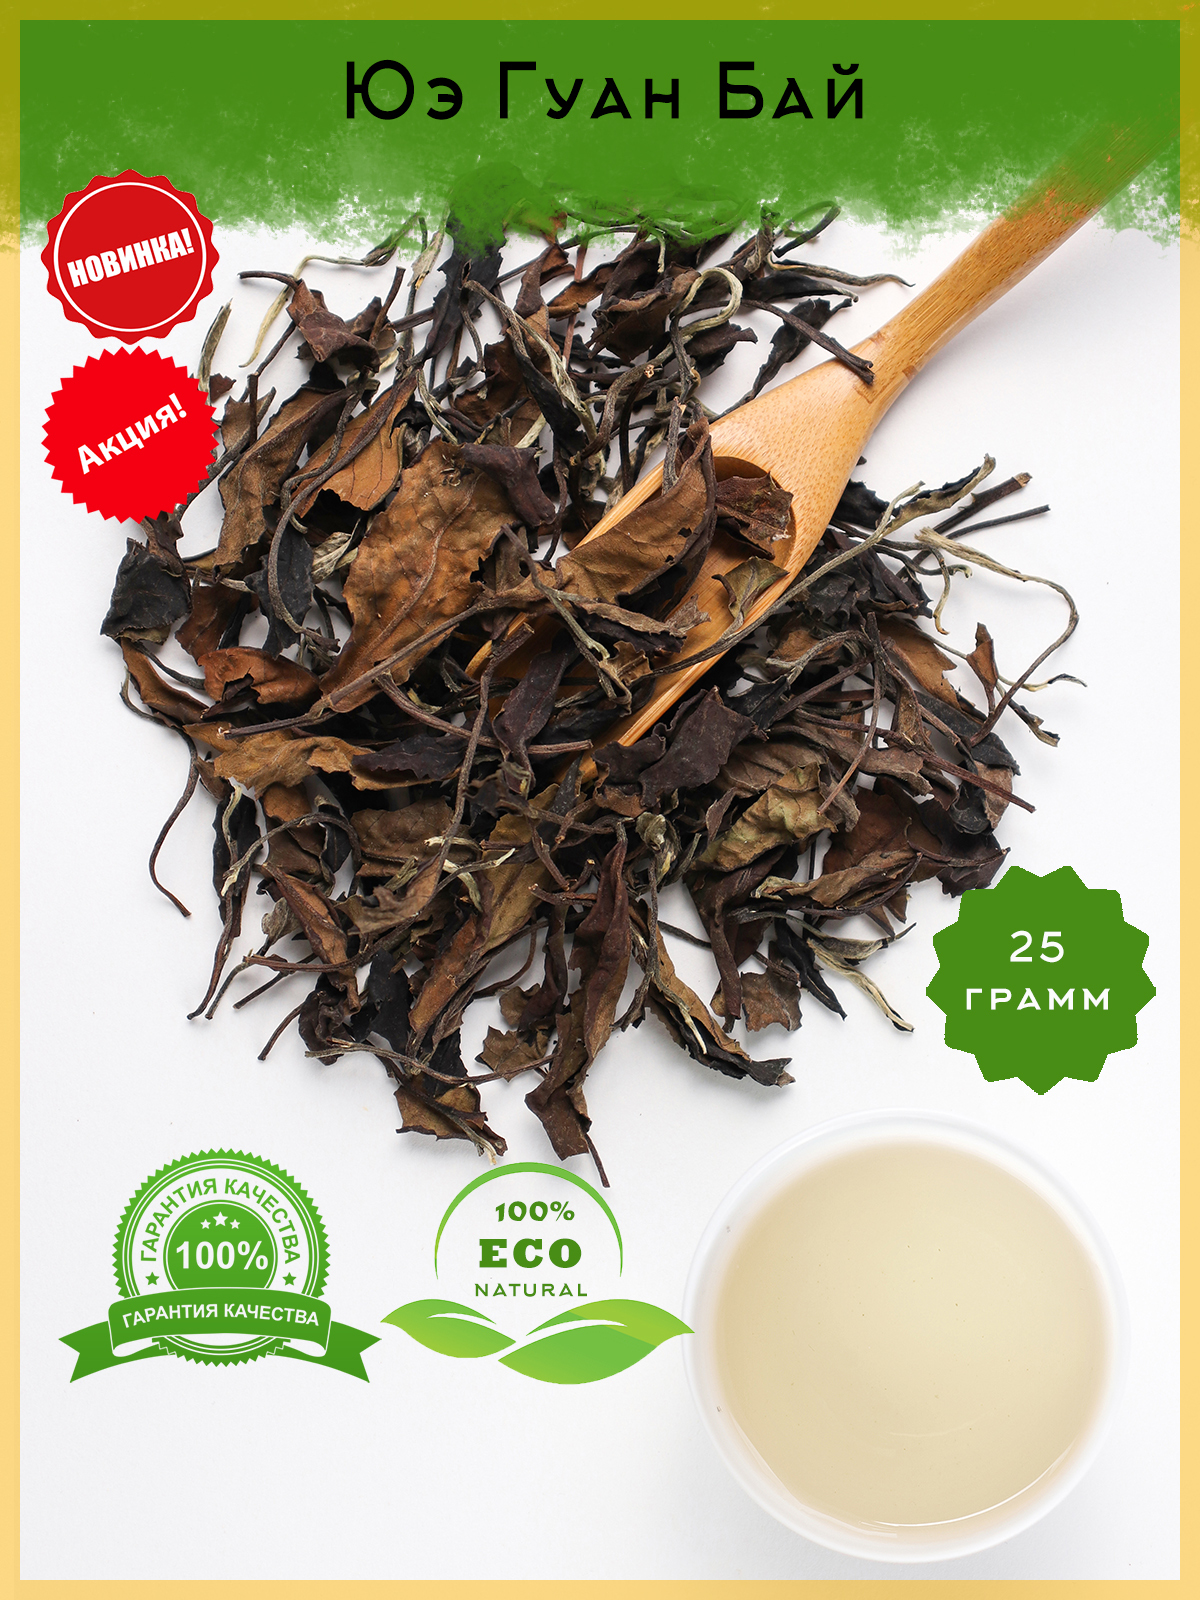 Юньнаньский чай. Саженцы китайского чая. Zhong Guo Ming Cha чай. Китайский чай бодрящий. Бела бай